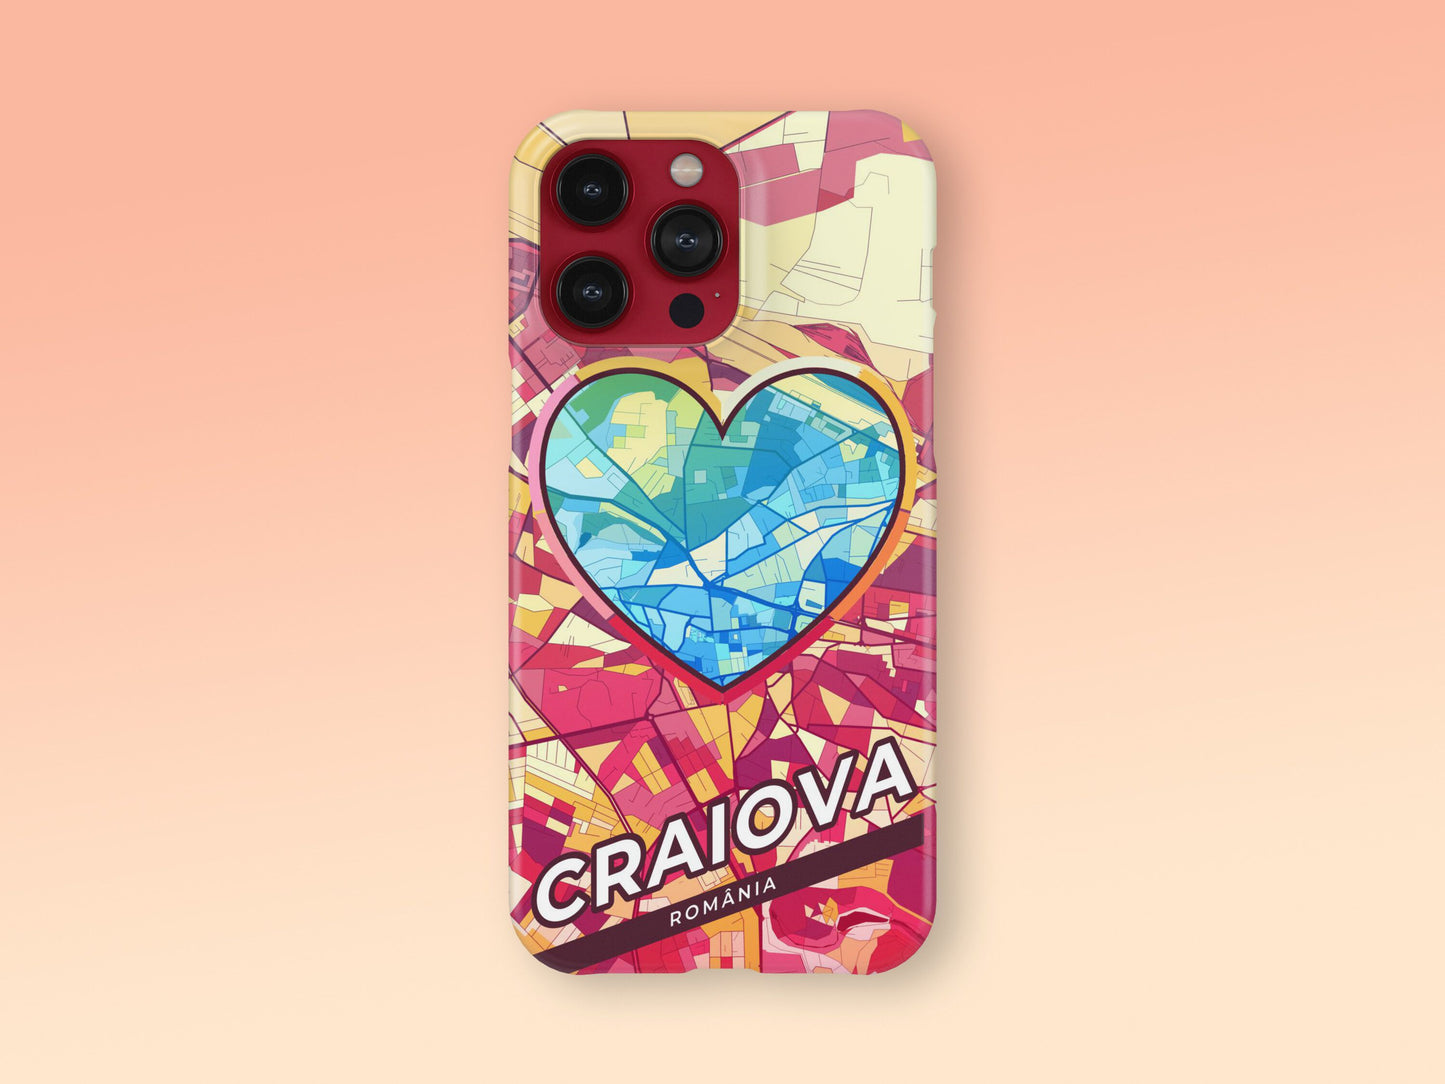 Craiova Romania slim phone case with colorful icon. Birthday, wedding or housewarming gift. Couple match cases. 2